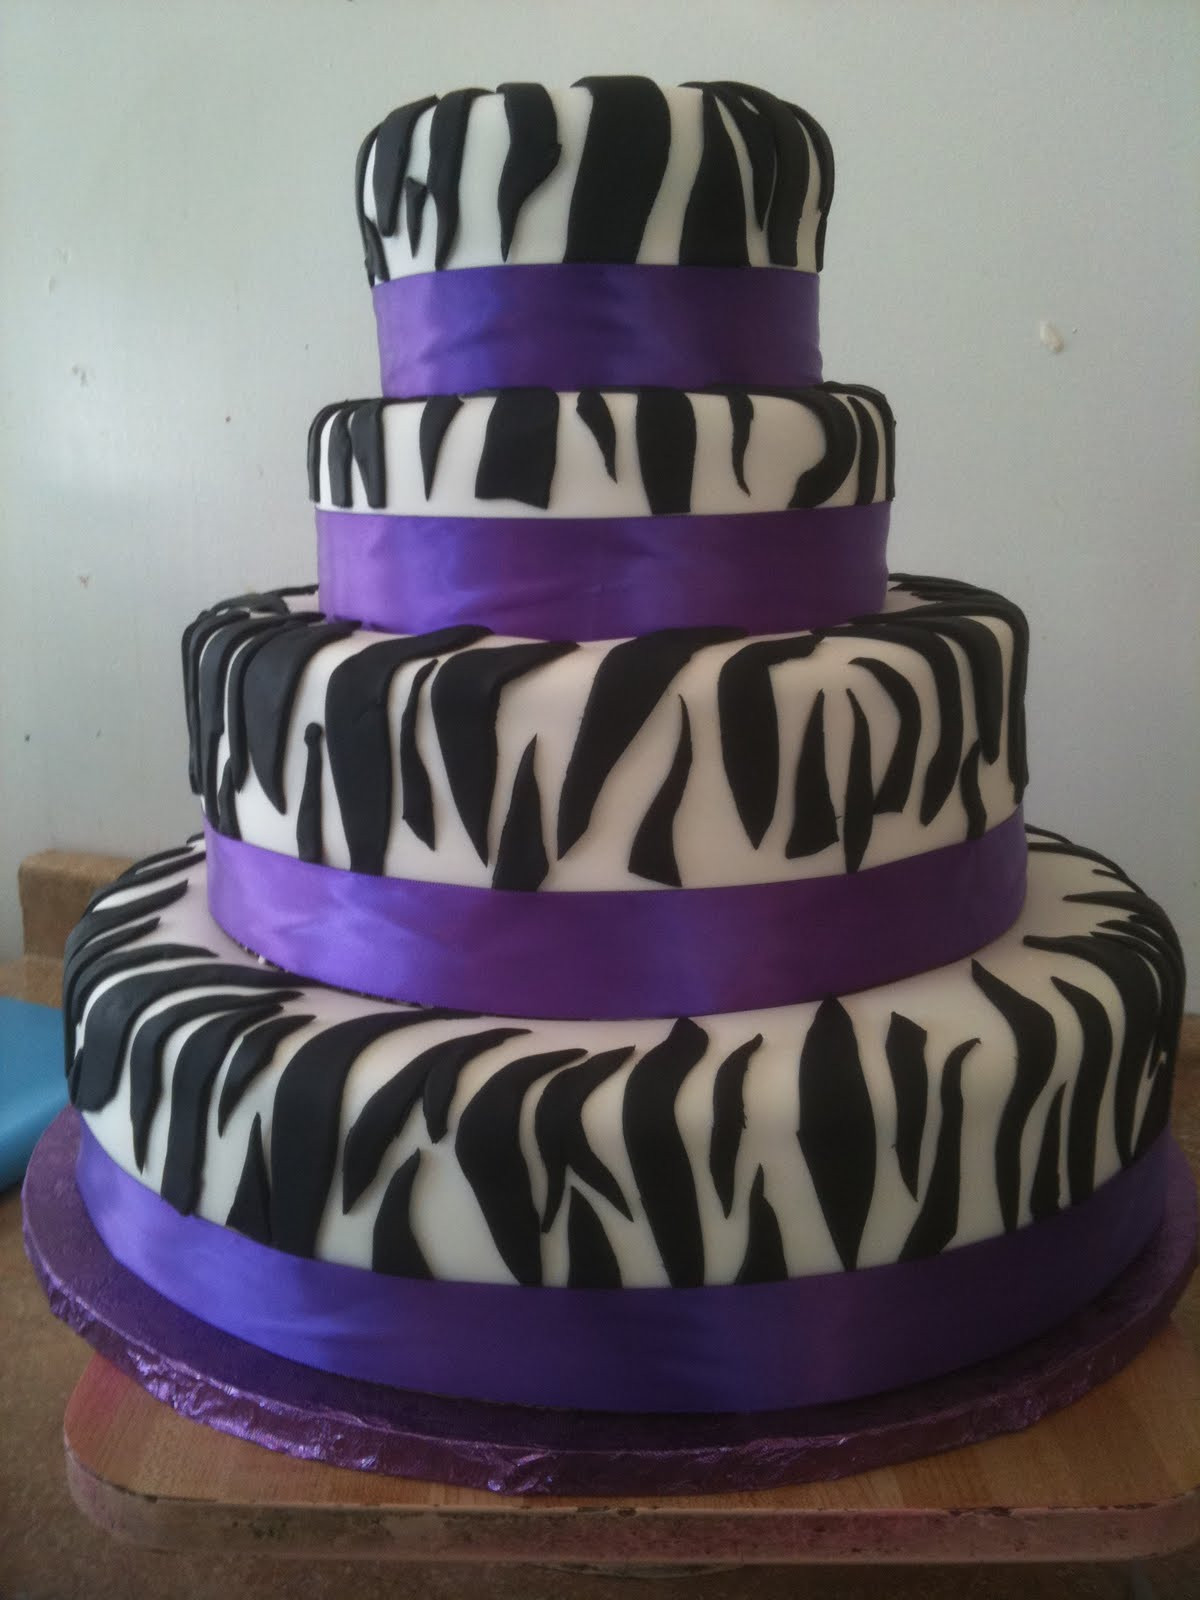 Zebra Birthday Cake
 Hector s Custom Cakes purple zebra 3 tier stacked